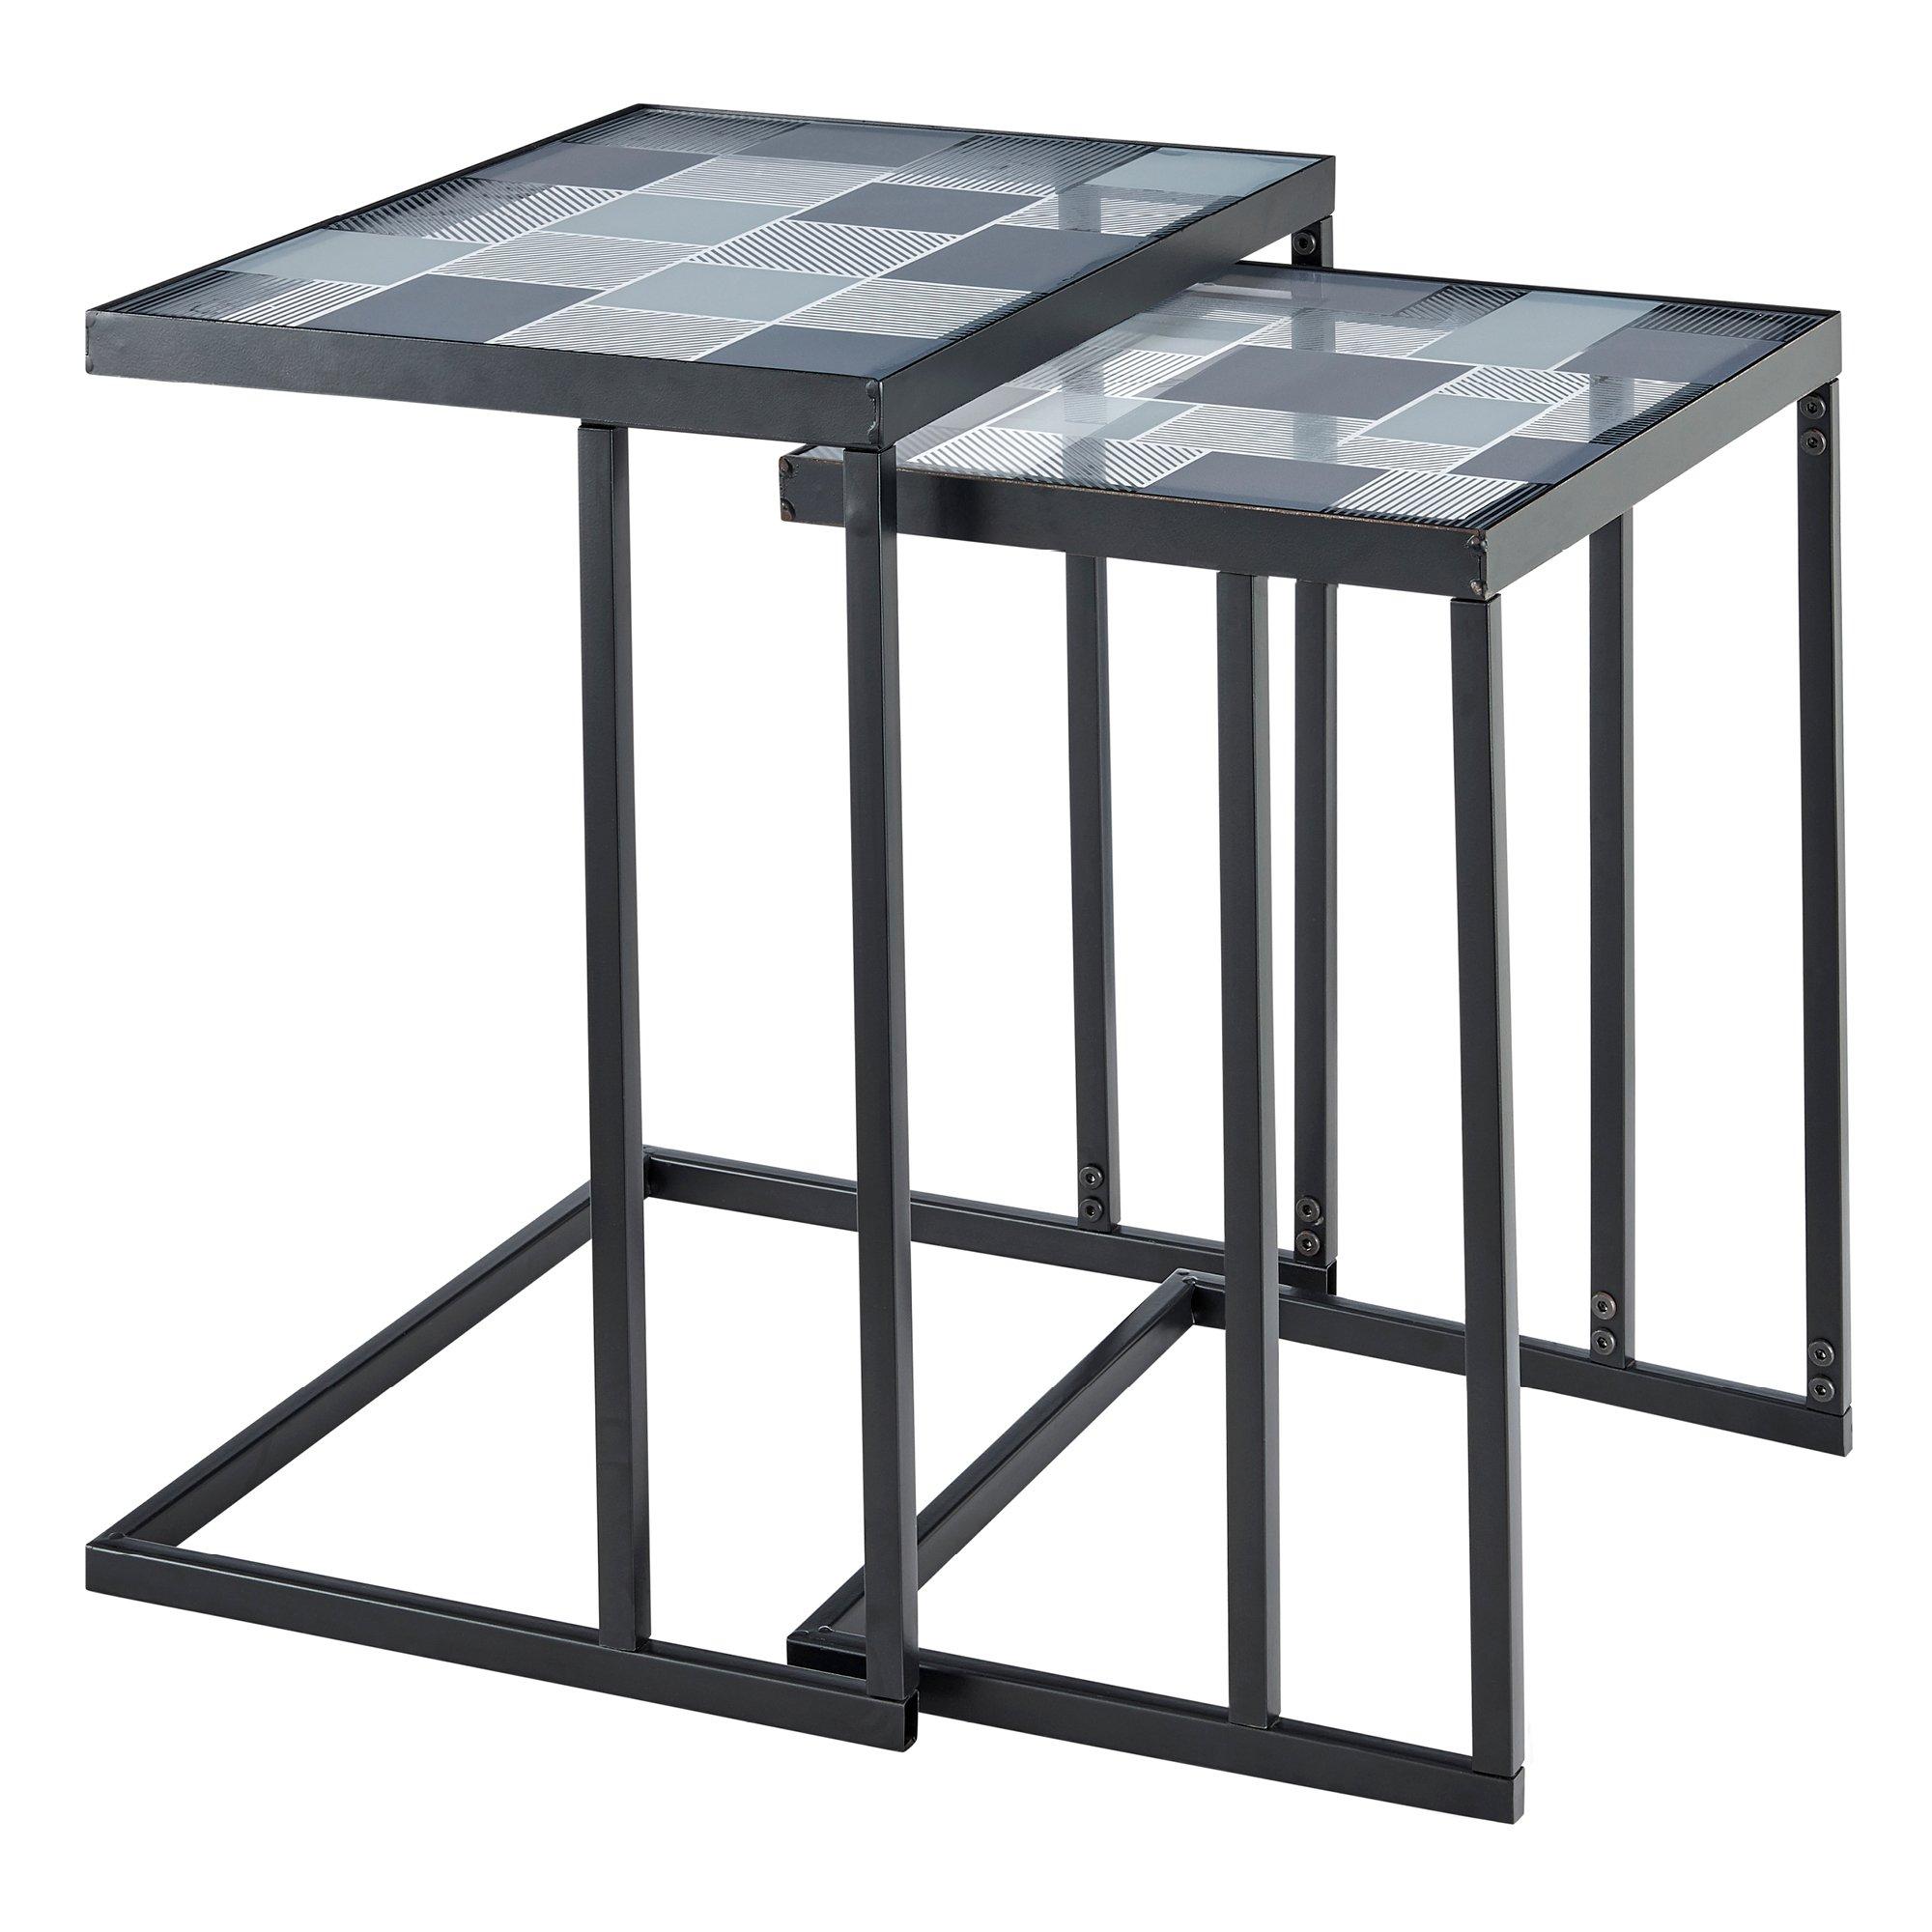 KAVIC Geometric Nesting End Tables - Retro Design with Glass Panel Art